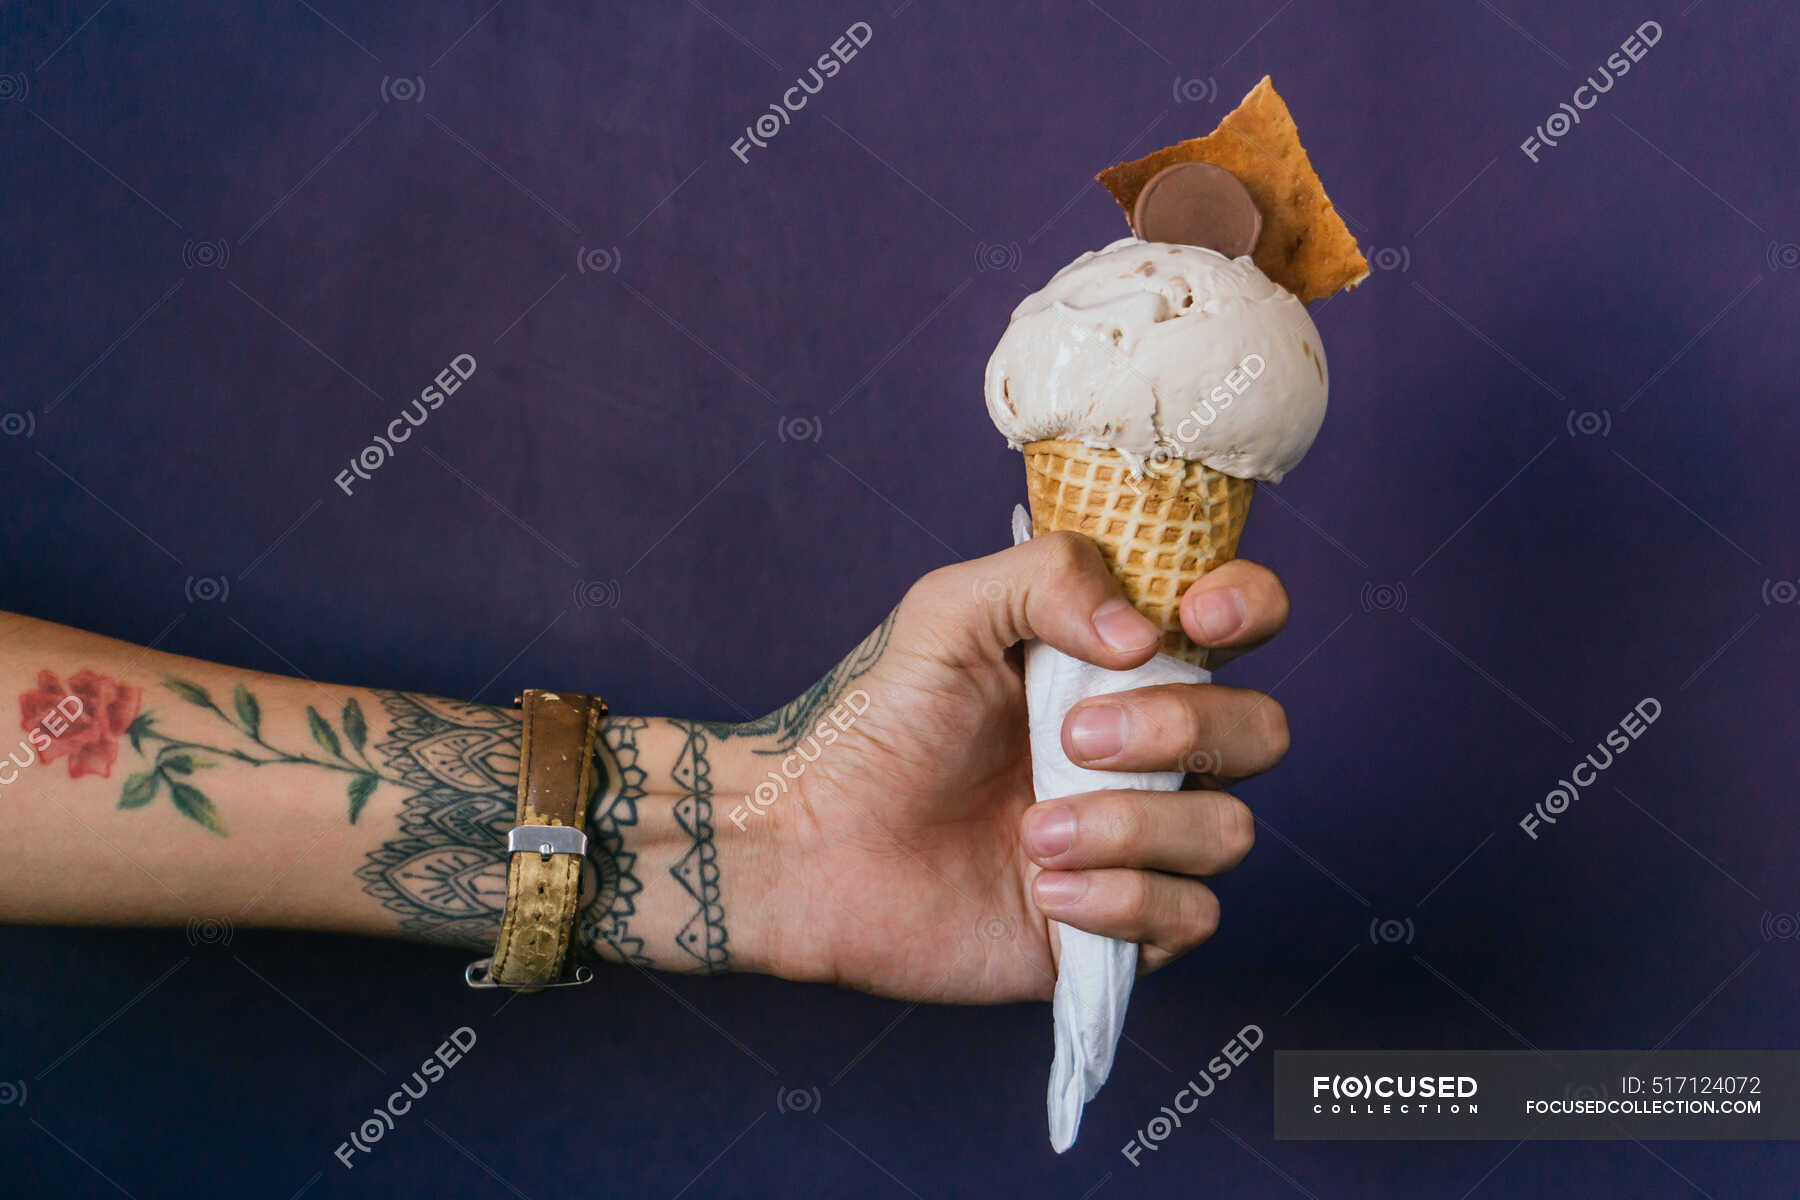 Ice Cream Cone Tattoo by blrtattoos on DeviantArt